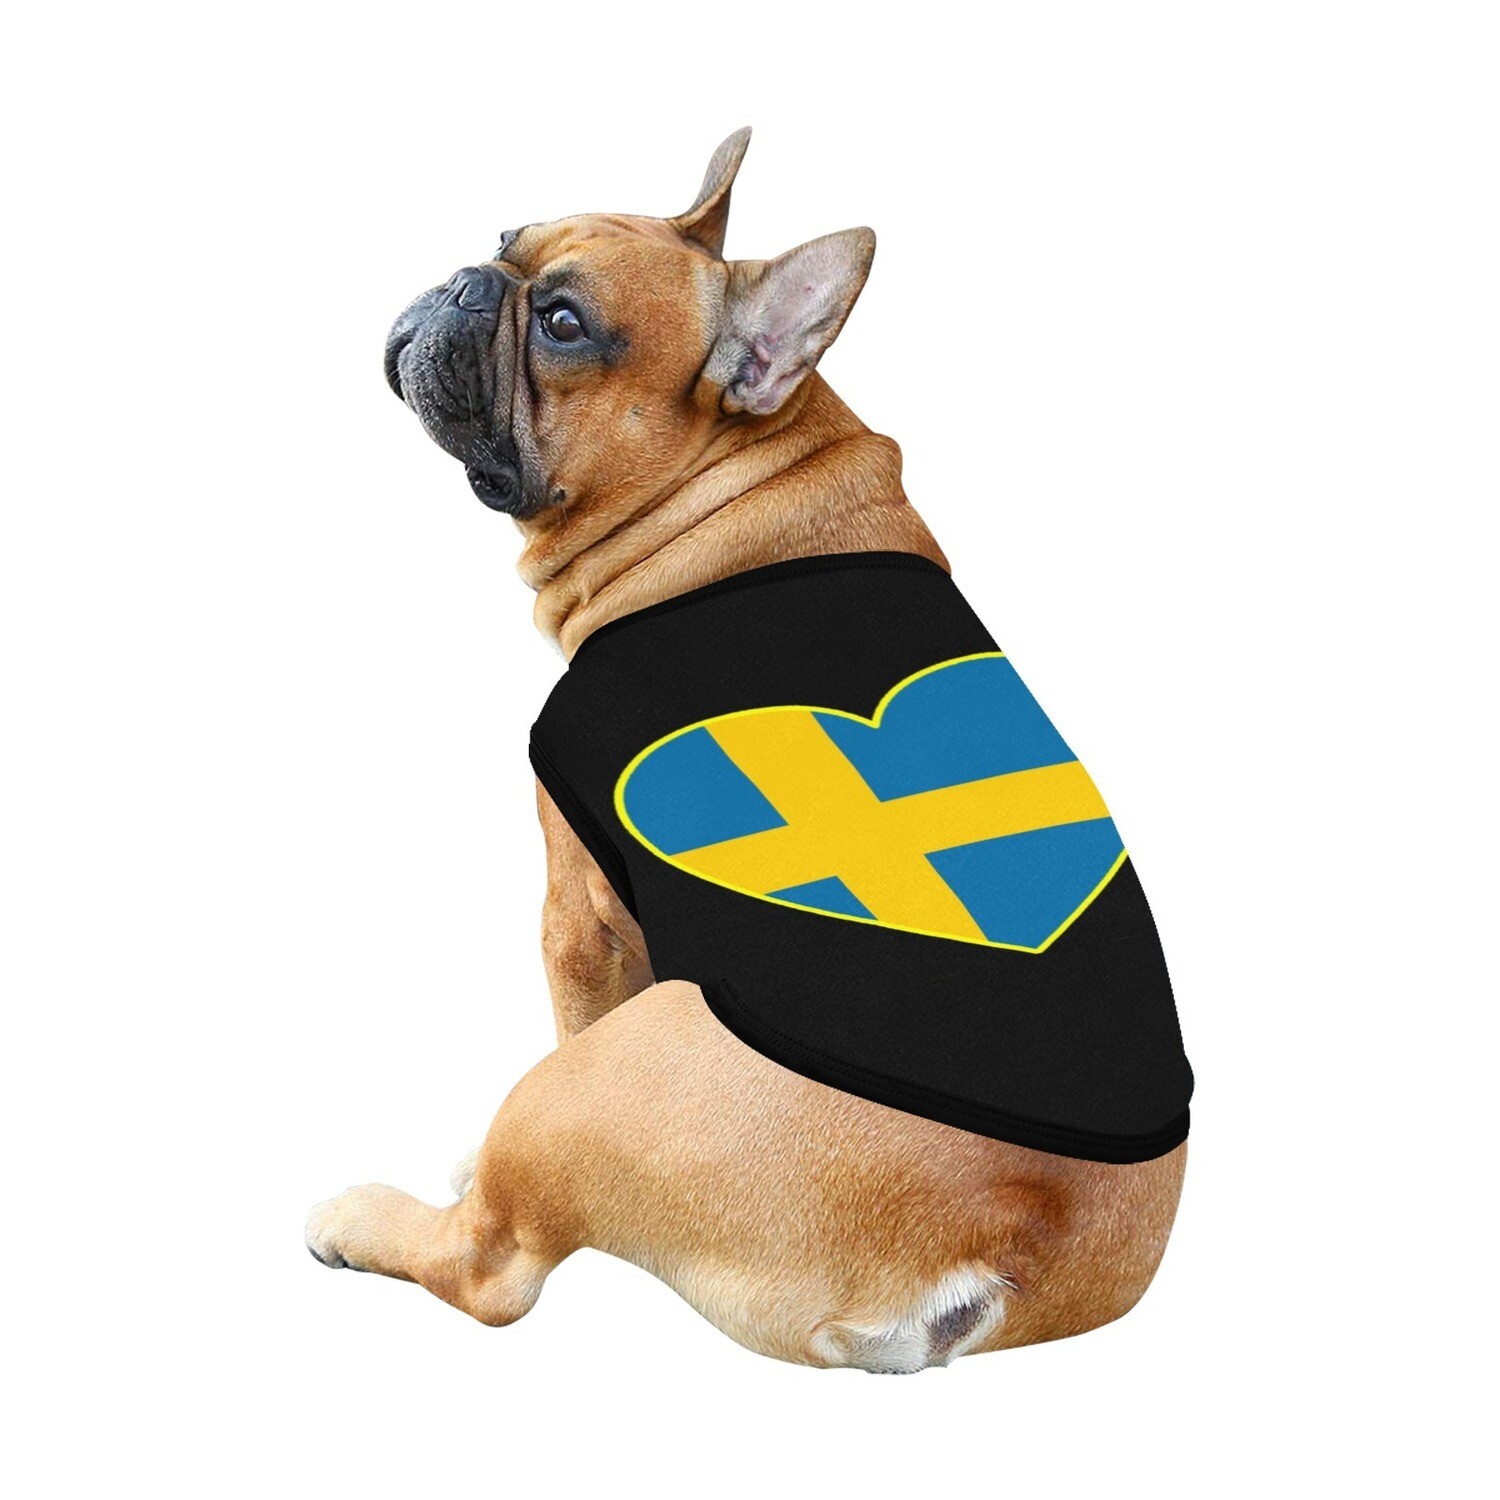 🐕🇸🇪I love Sweden, Swedish flag, dog t-shirt, dog gift, dog tank top, dog shirt, dog clothes, gift, 7 sizes XS to 3XL, heart shape, black